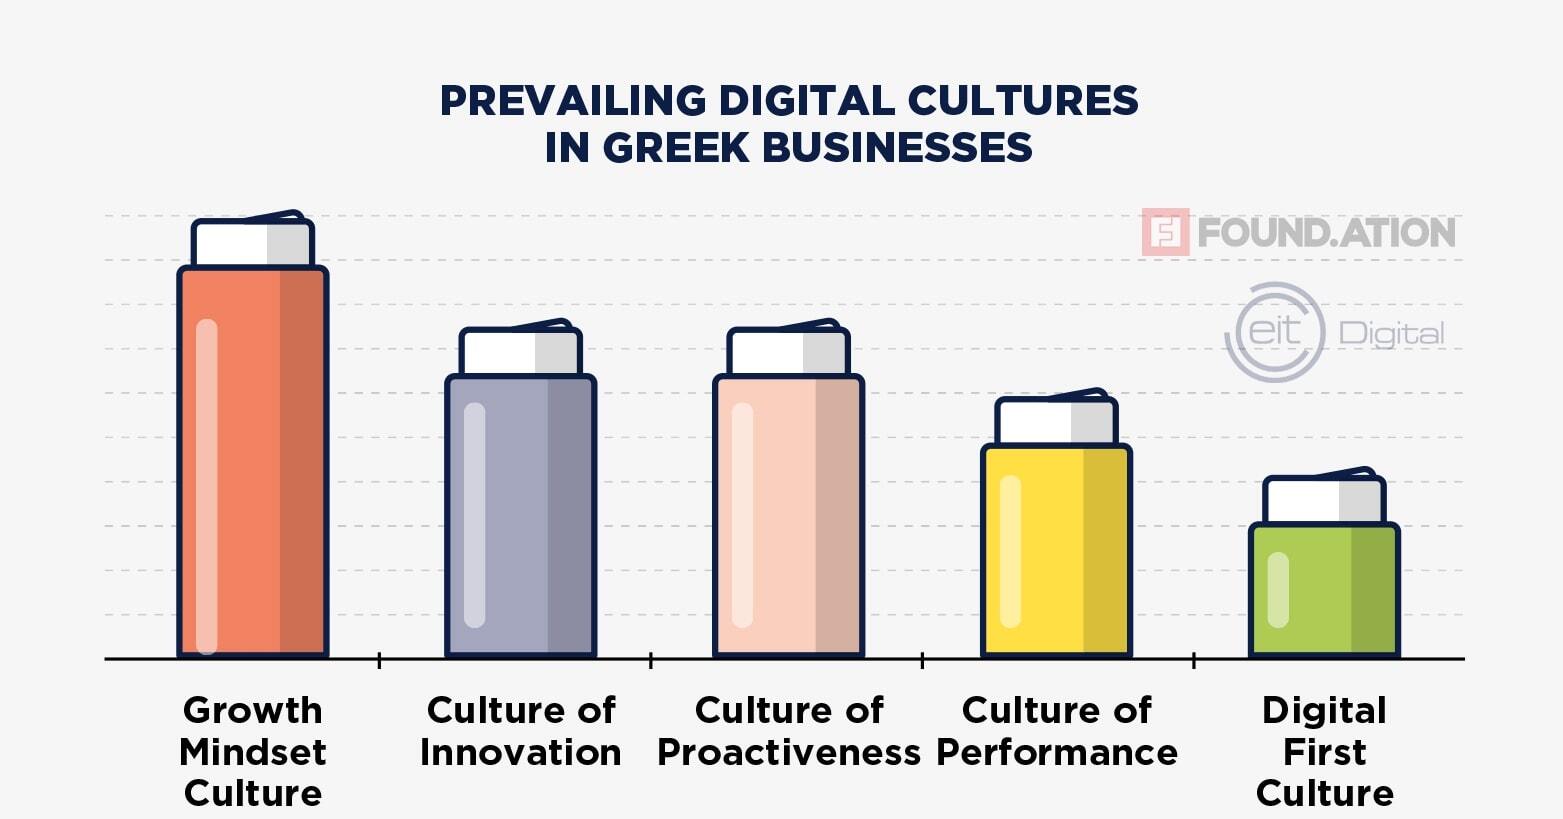 Foundation-Digital-Transformation-in-Greece-report-2022-2023-cultures.jpg?mtime=20230113102805#asset:392543